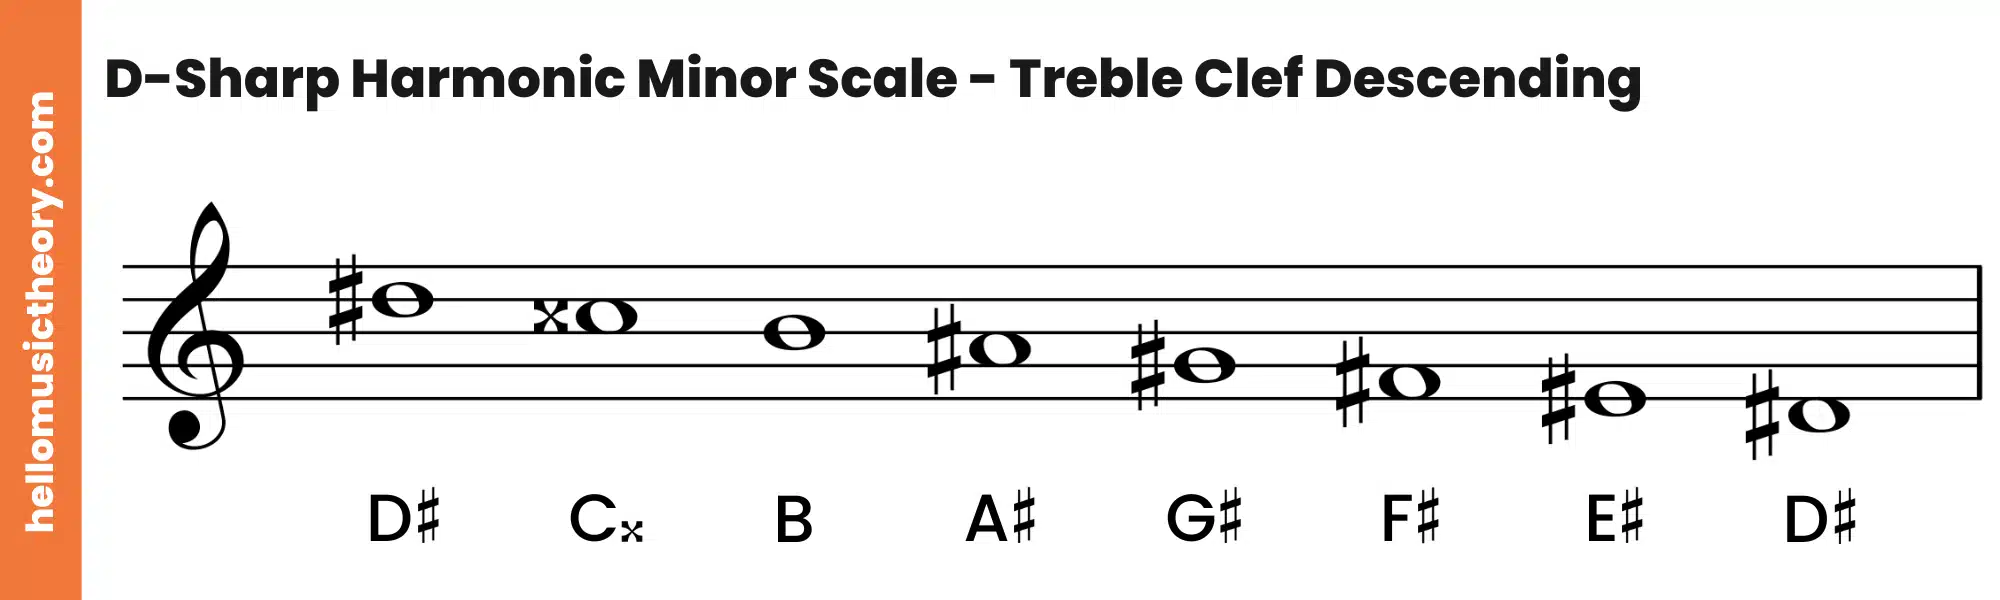 D-Sharp Harmonic Minor Scale Treble Clef Descending